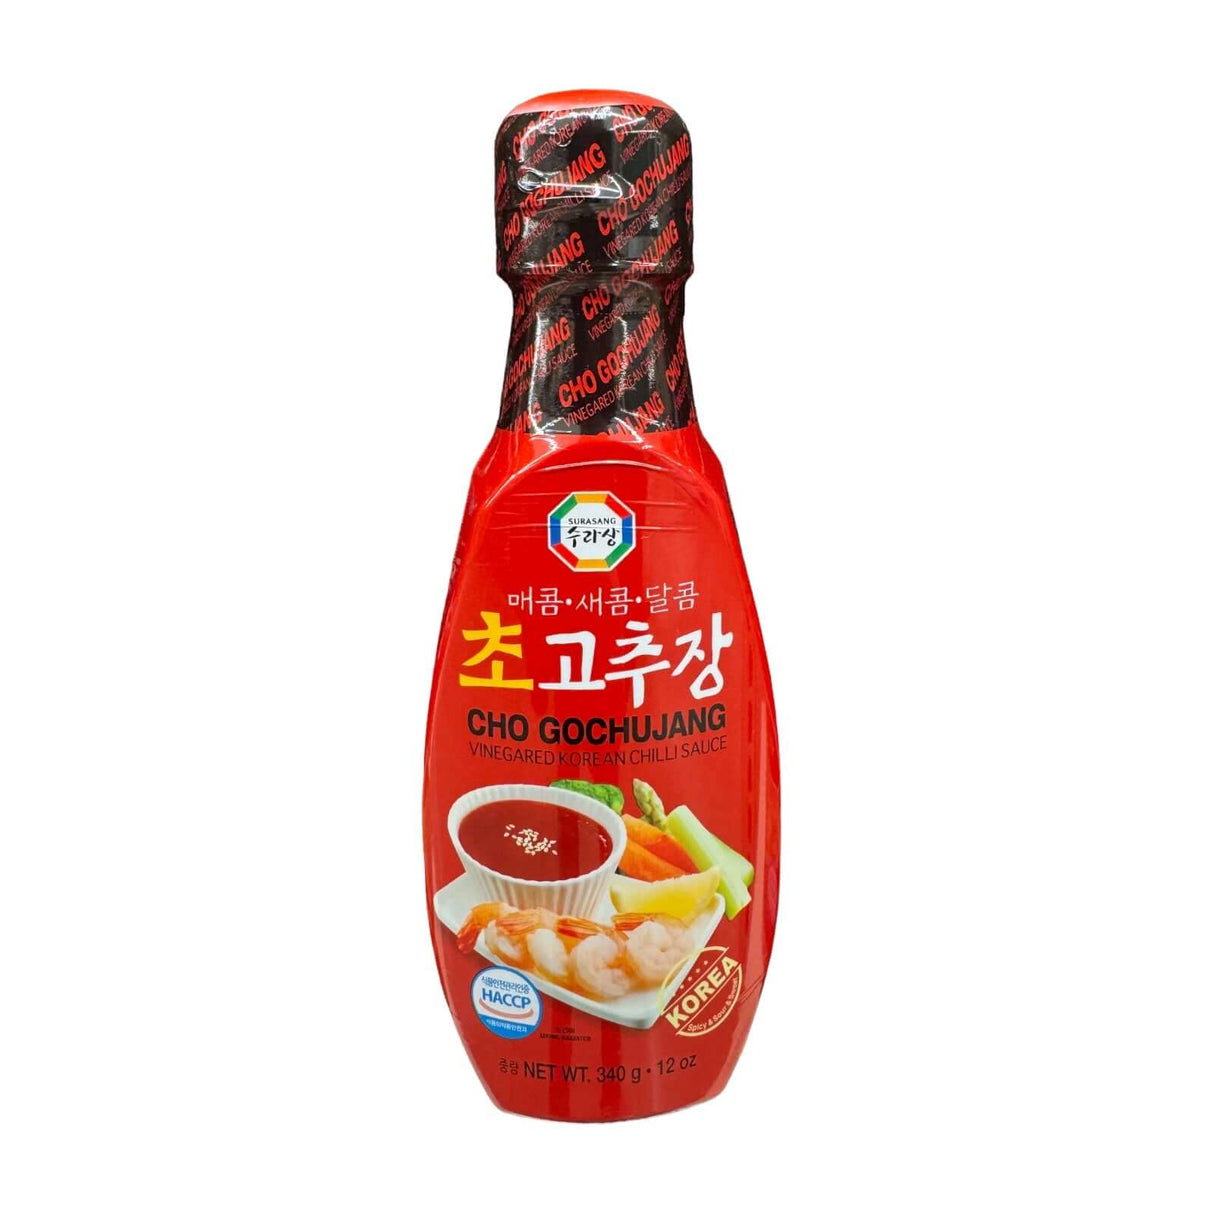 Surasang Cho Gochujang Vinegar Korean Chilli Sauce